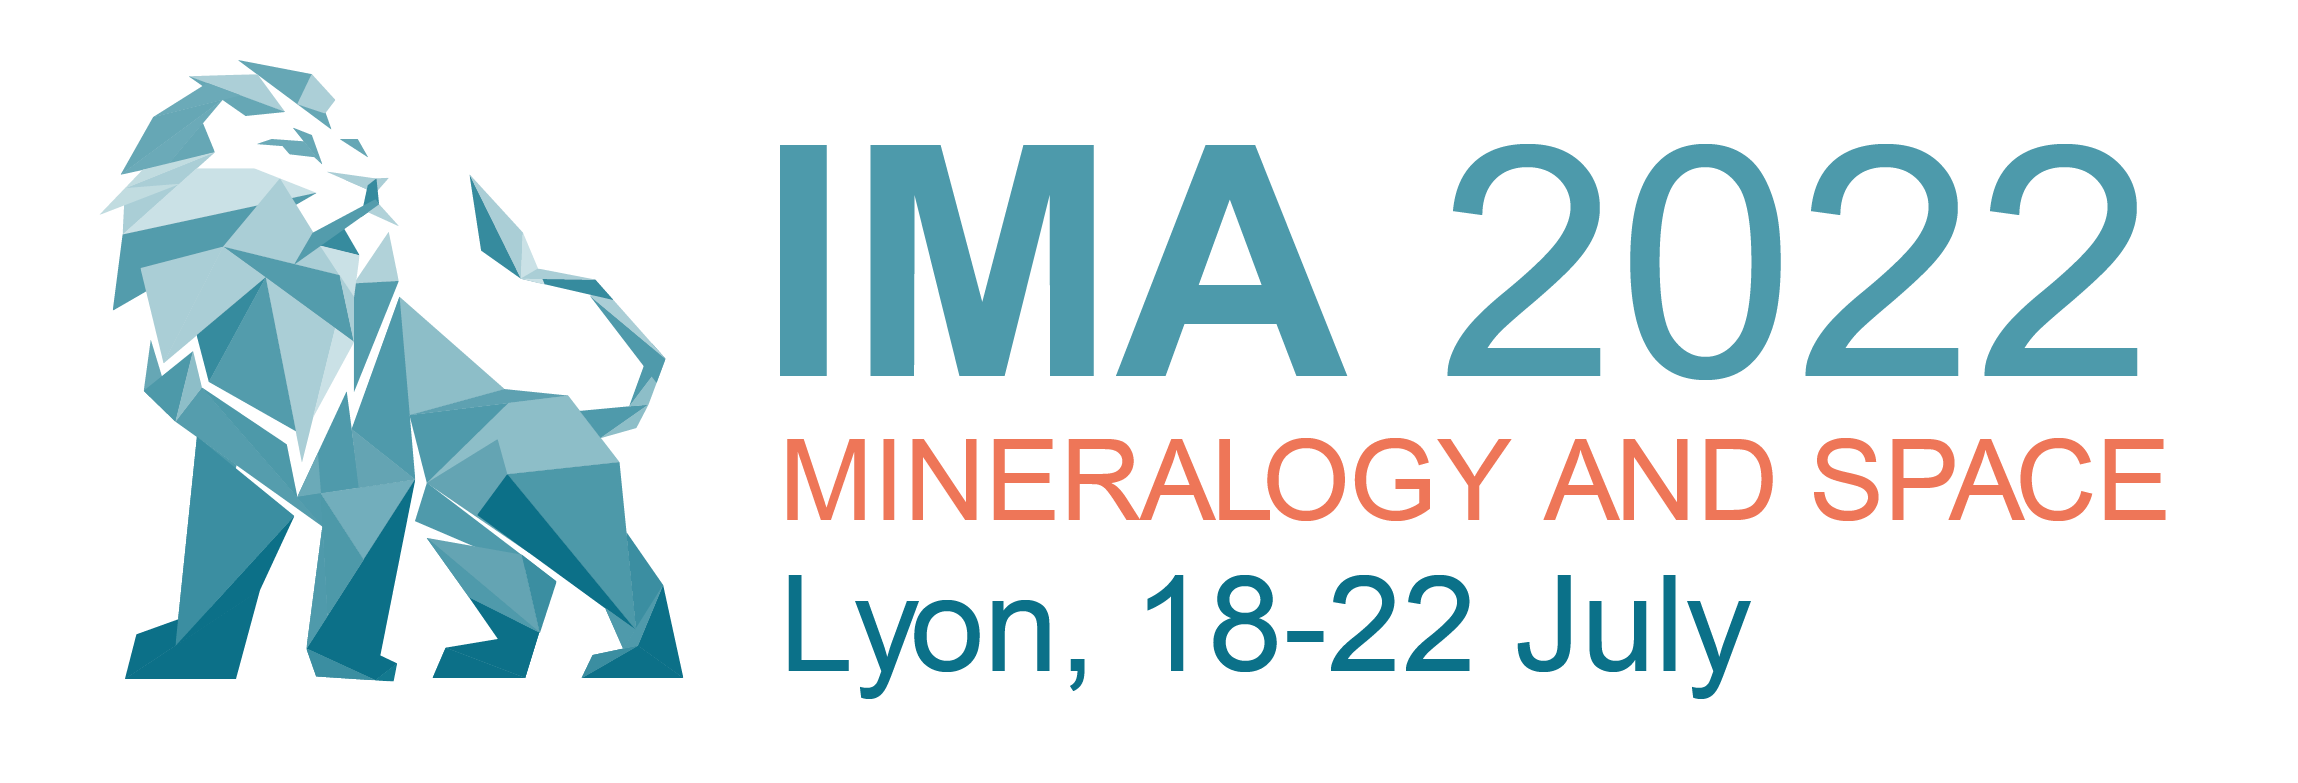 IMA meeting 2022 banner